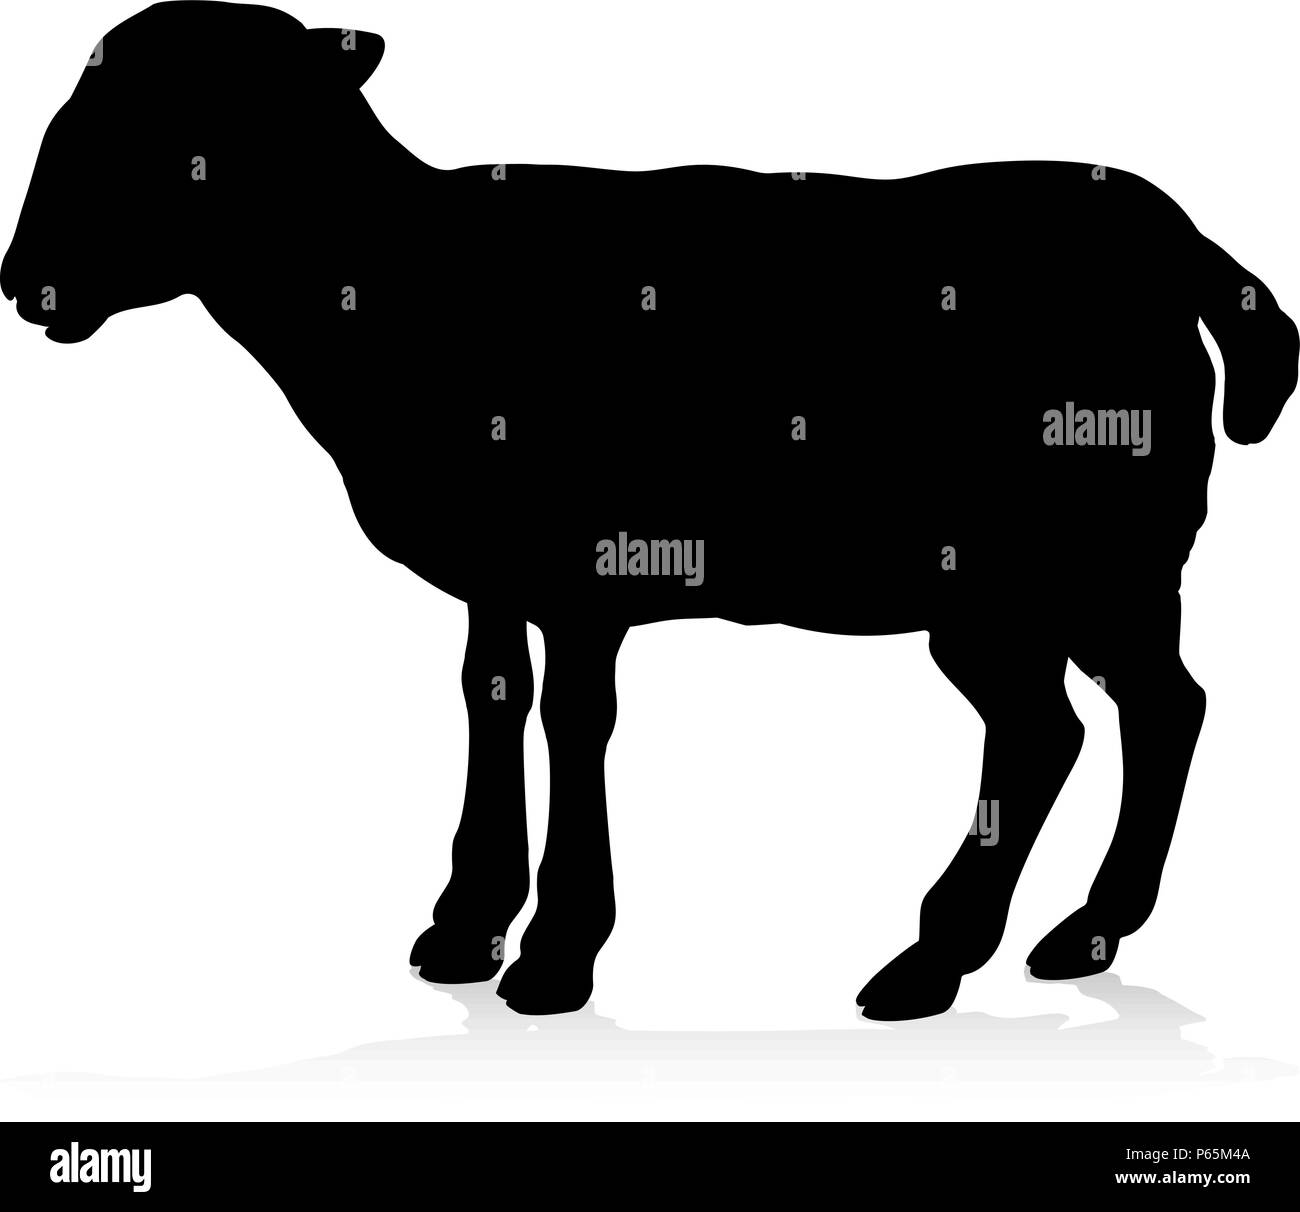 Sheep Farm Animal Silhouette Stock Vector